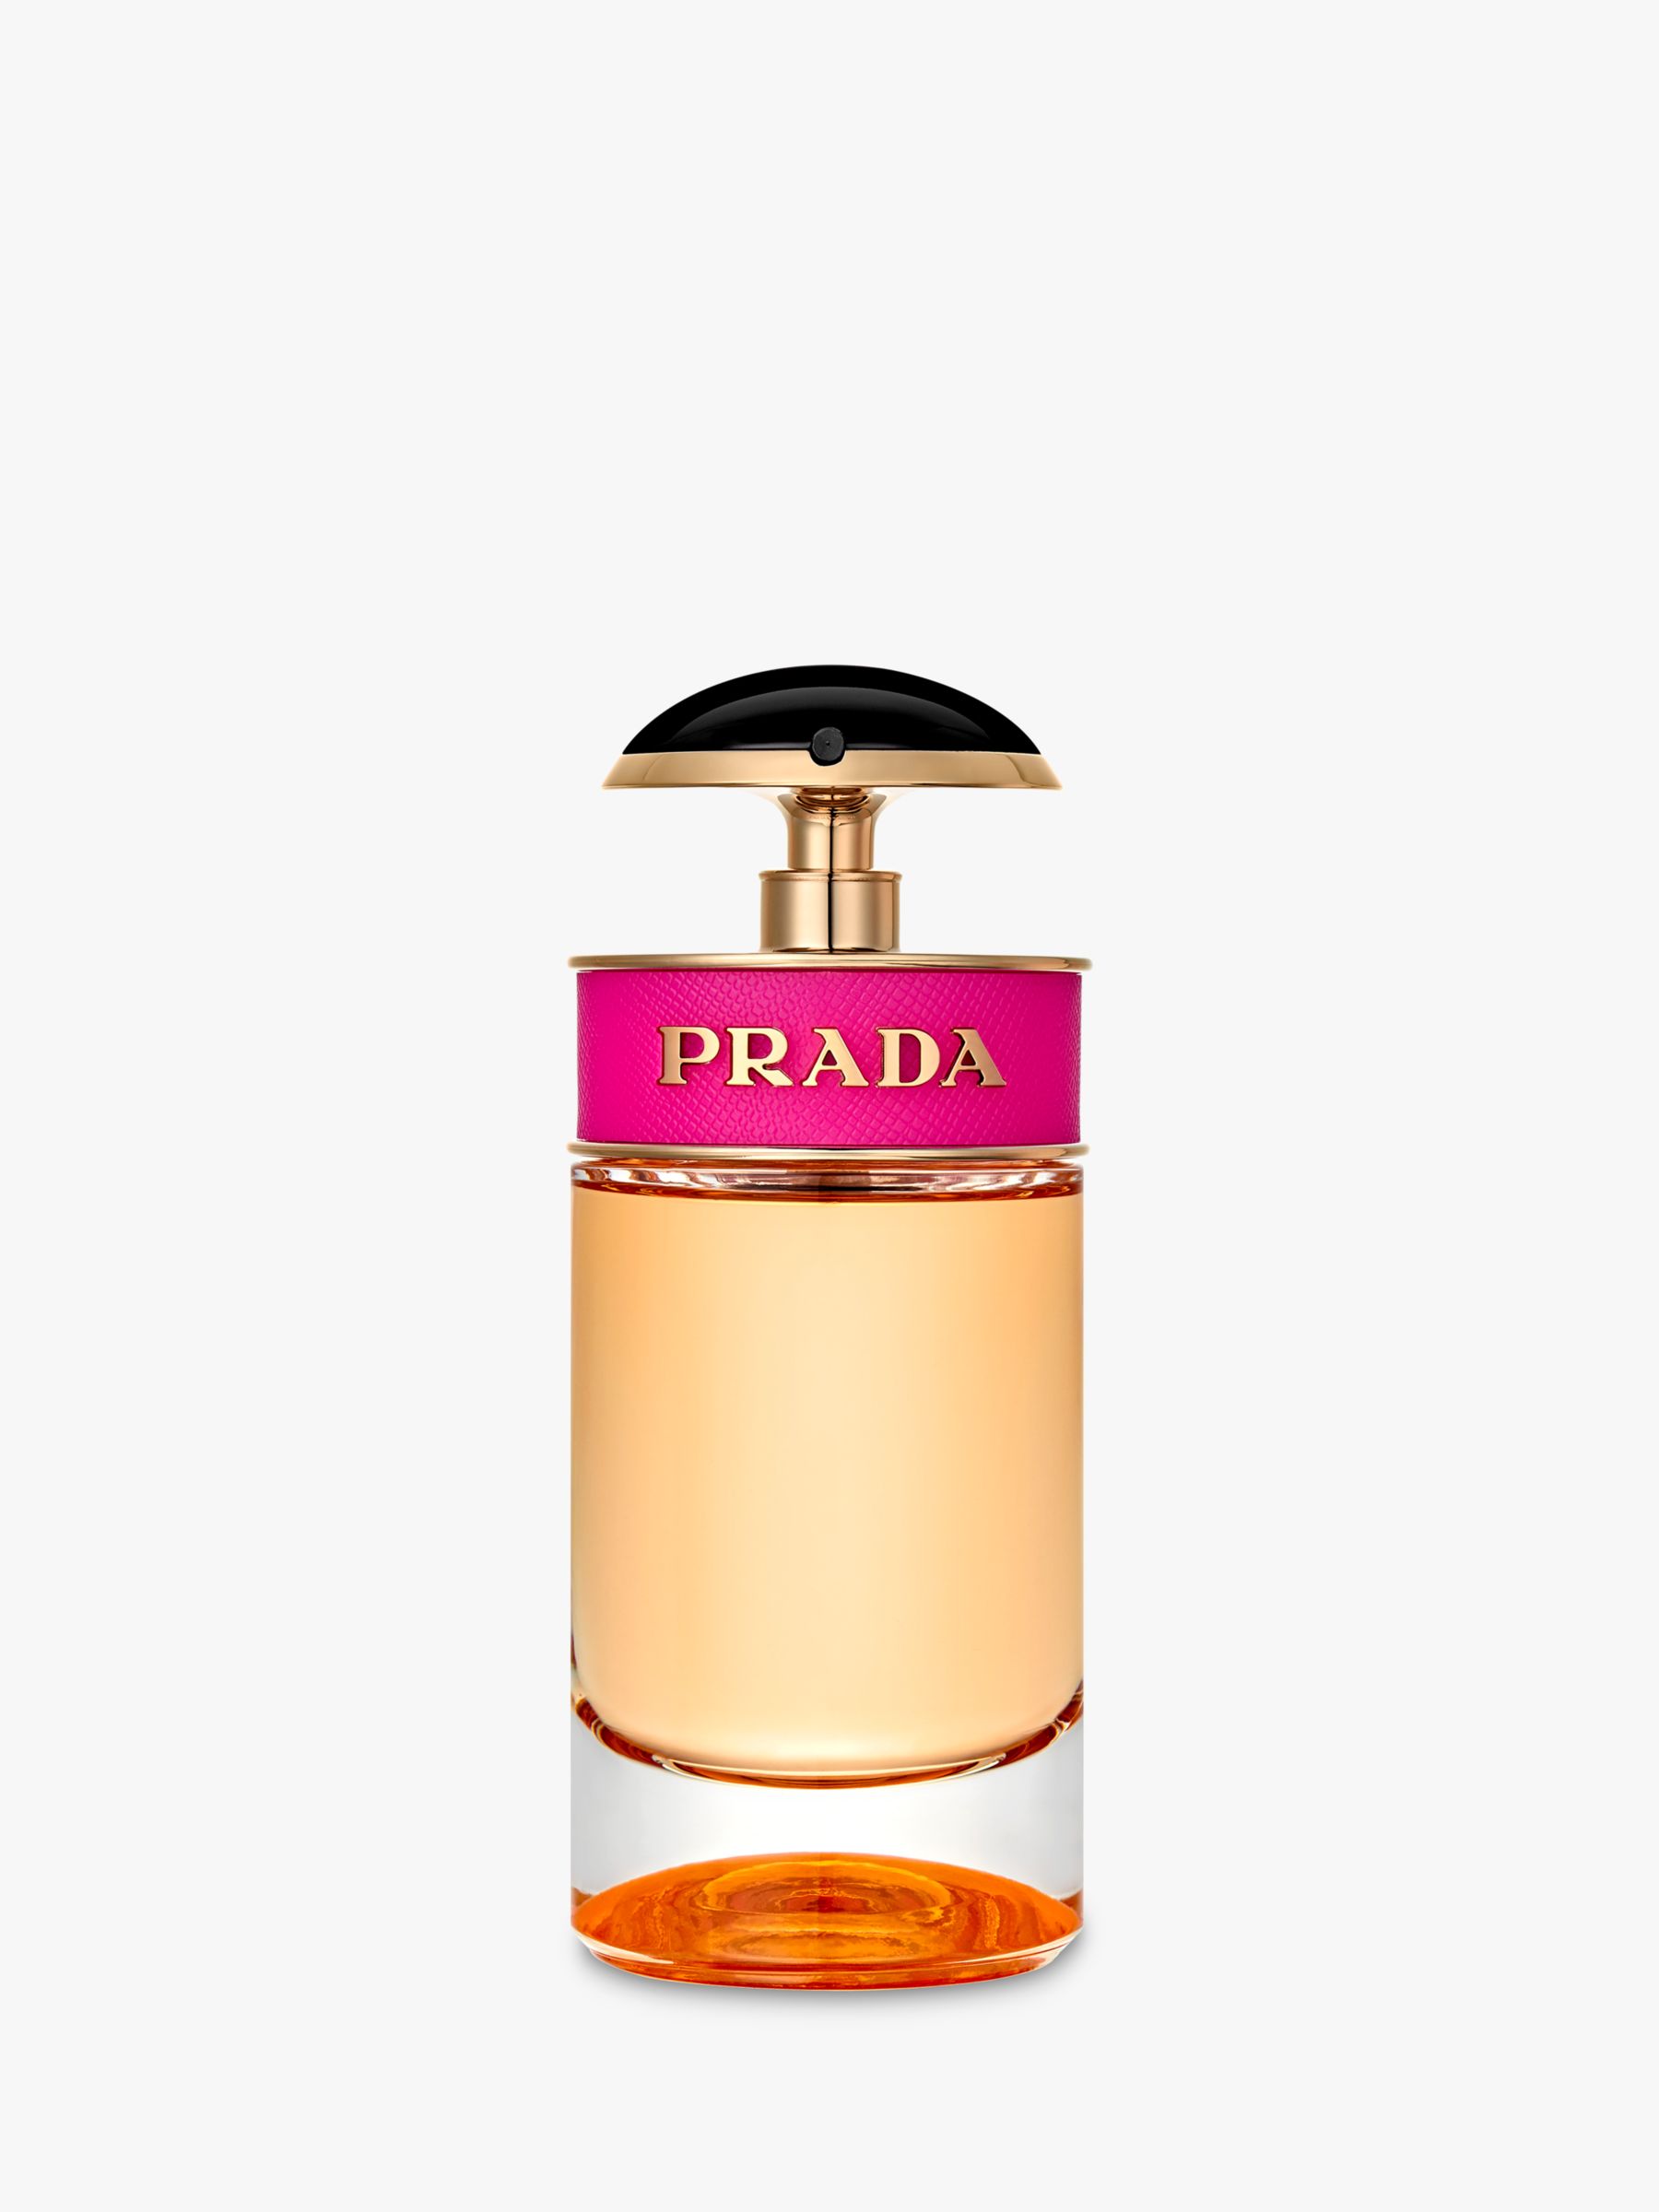 prada candy perfume 80ml price